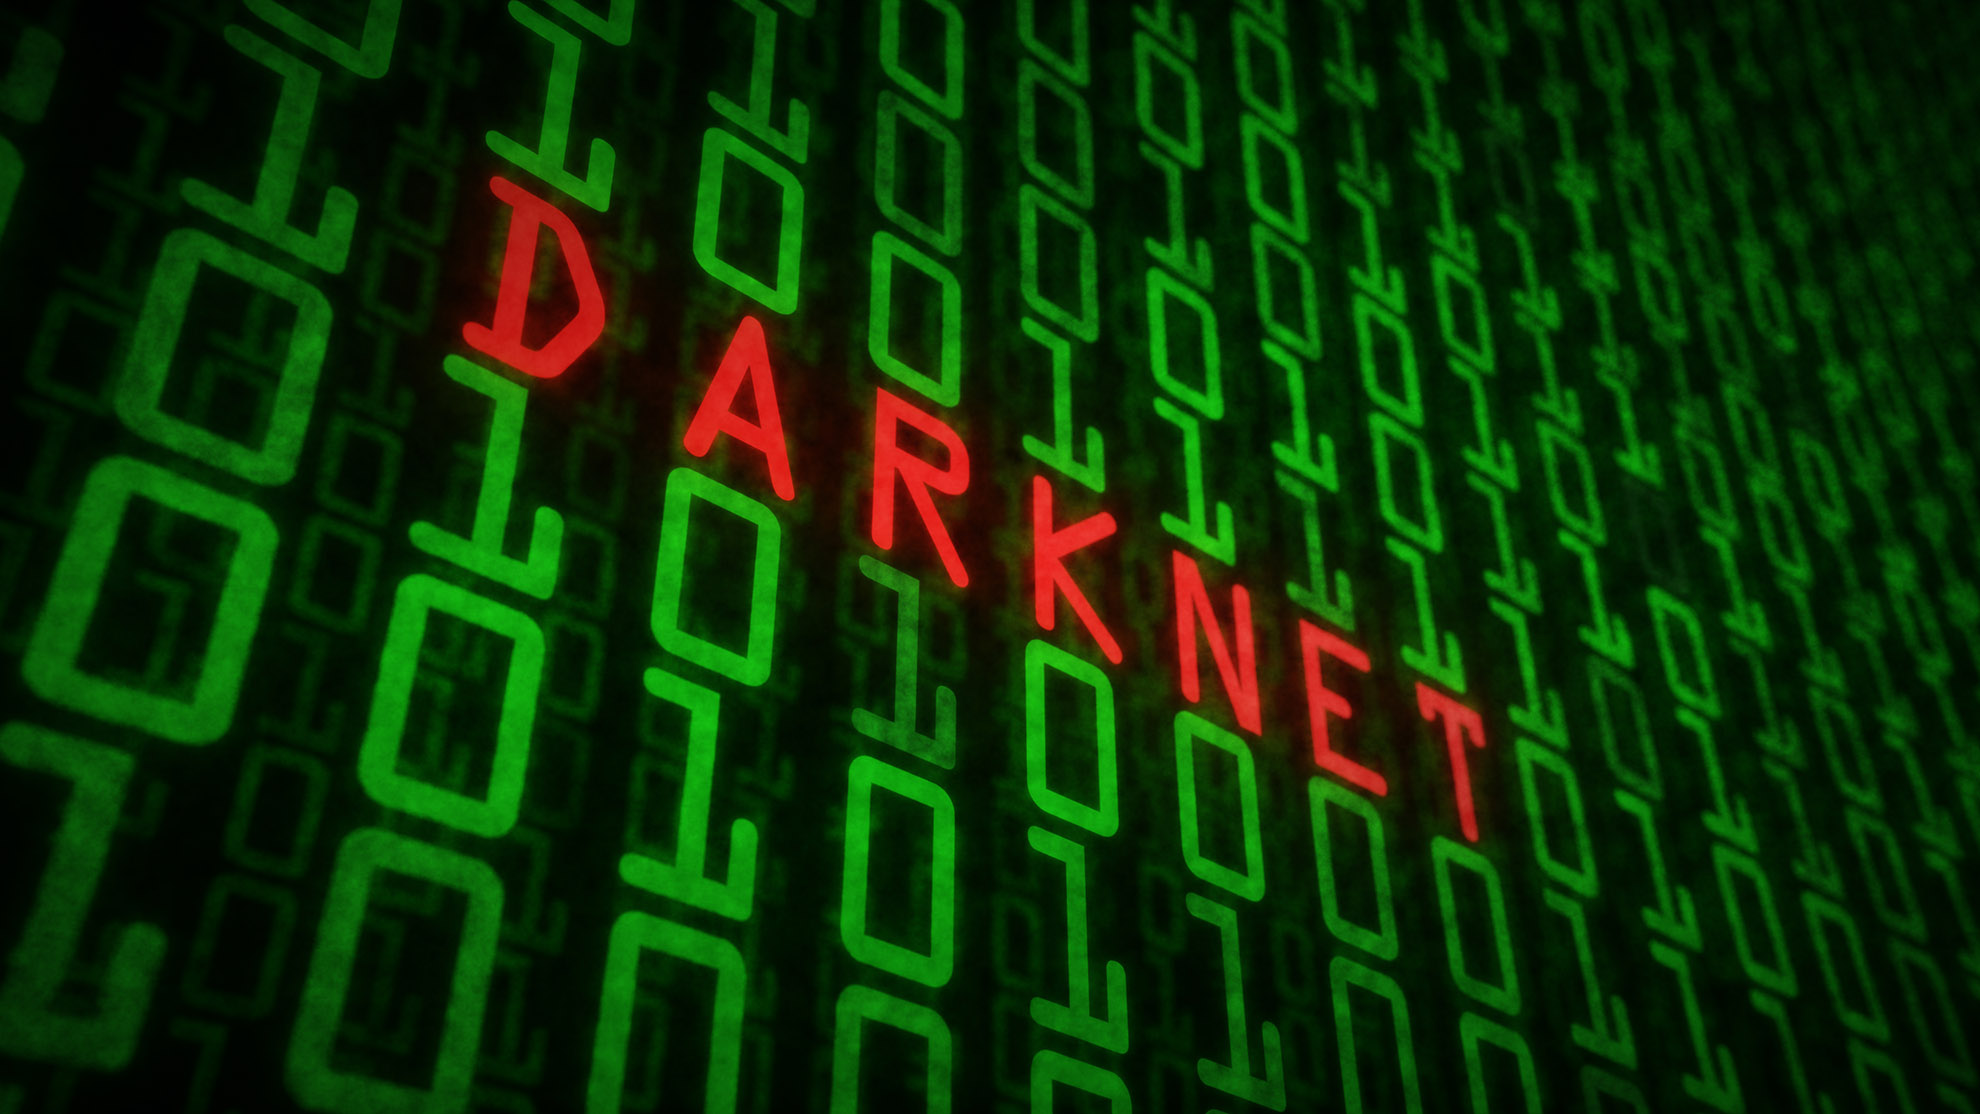 darknet официальный сайт даркнет2web